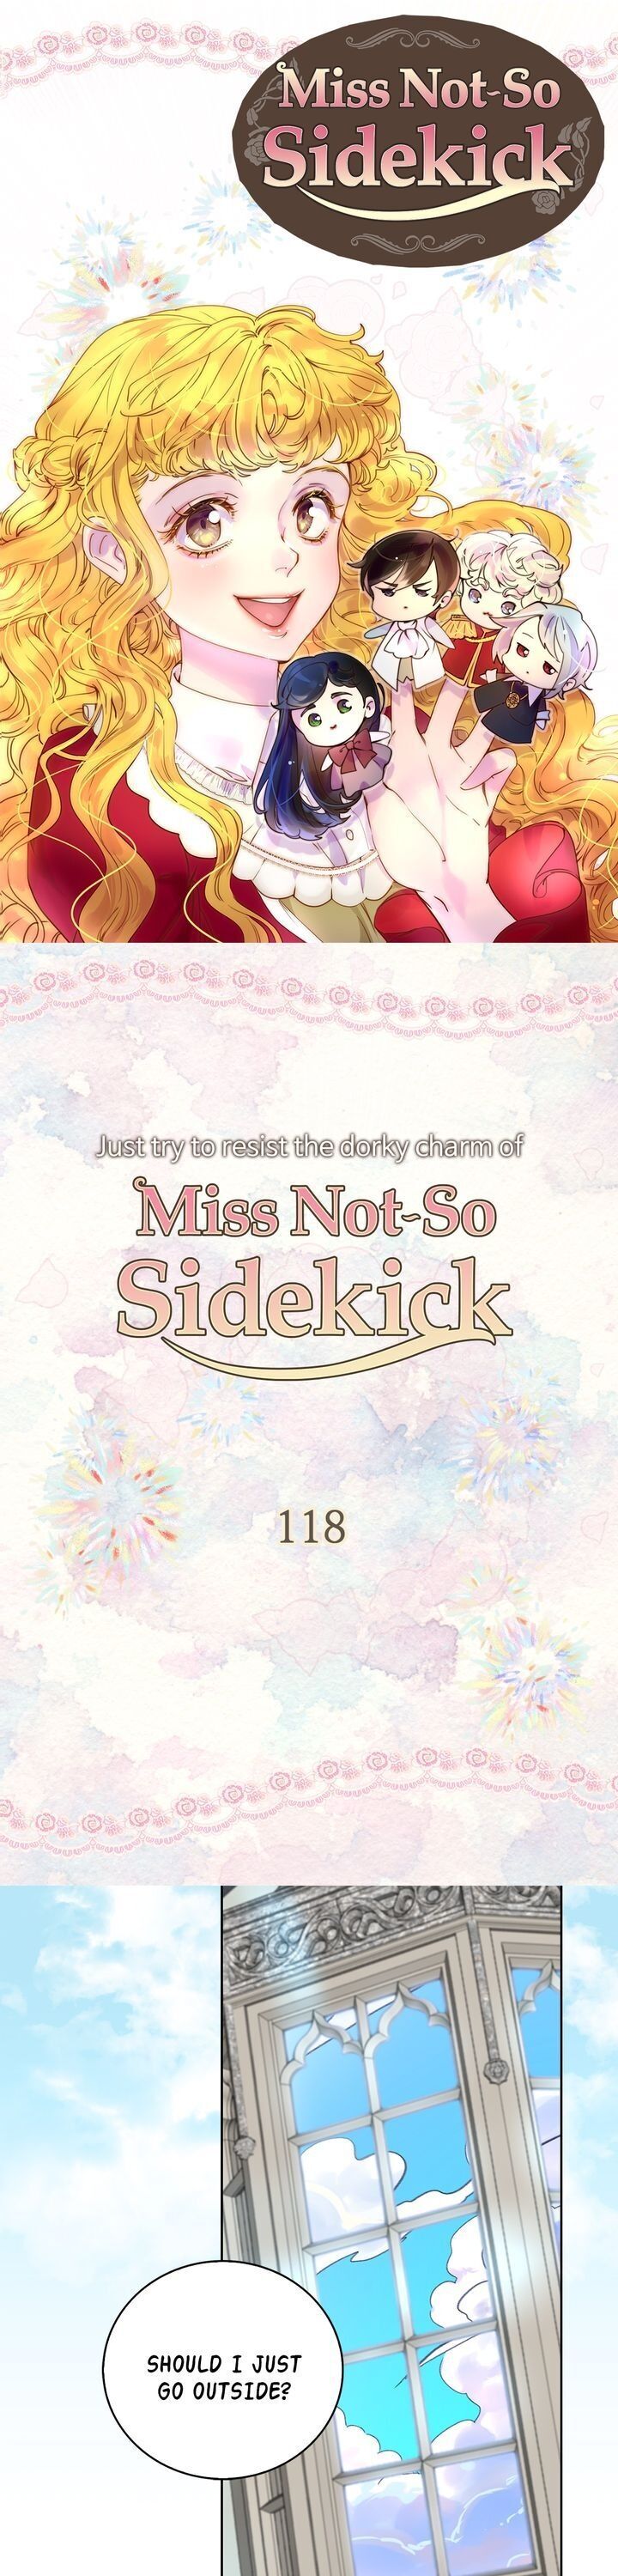 Miss Not-So Sidekick - Page 1